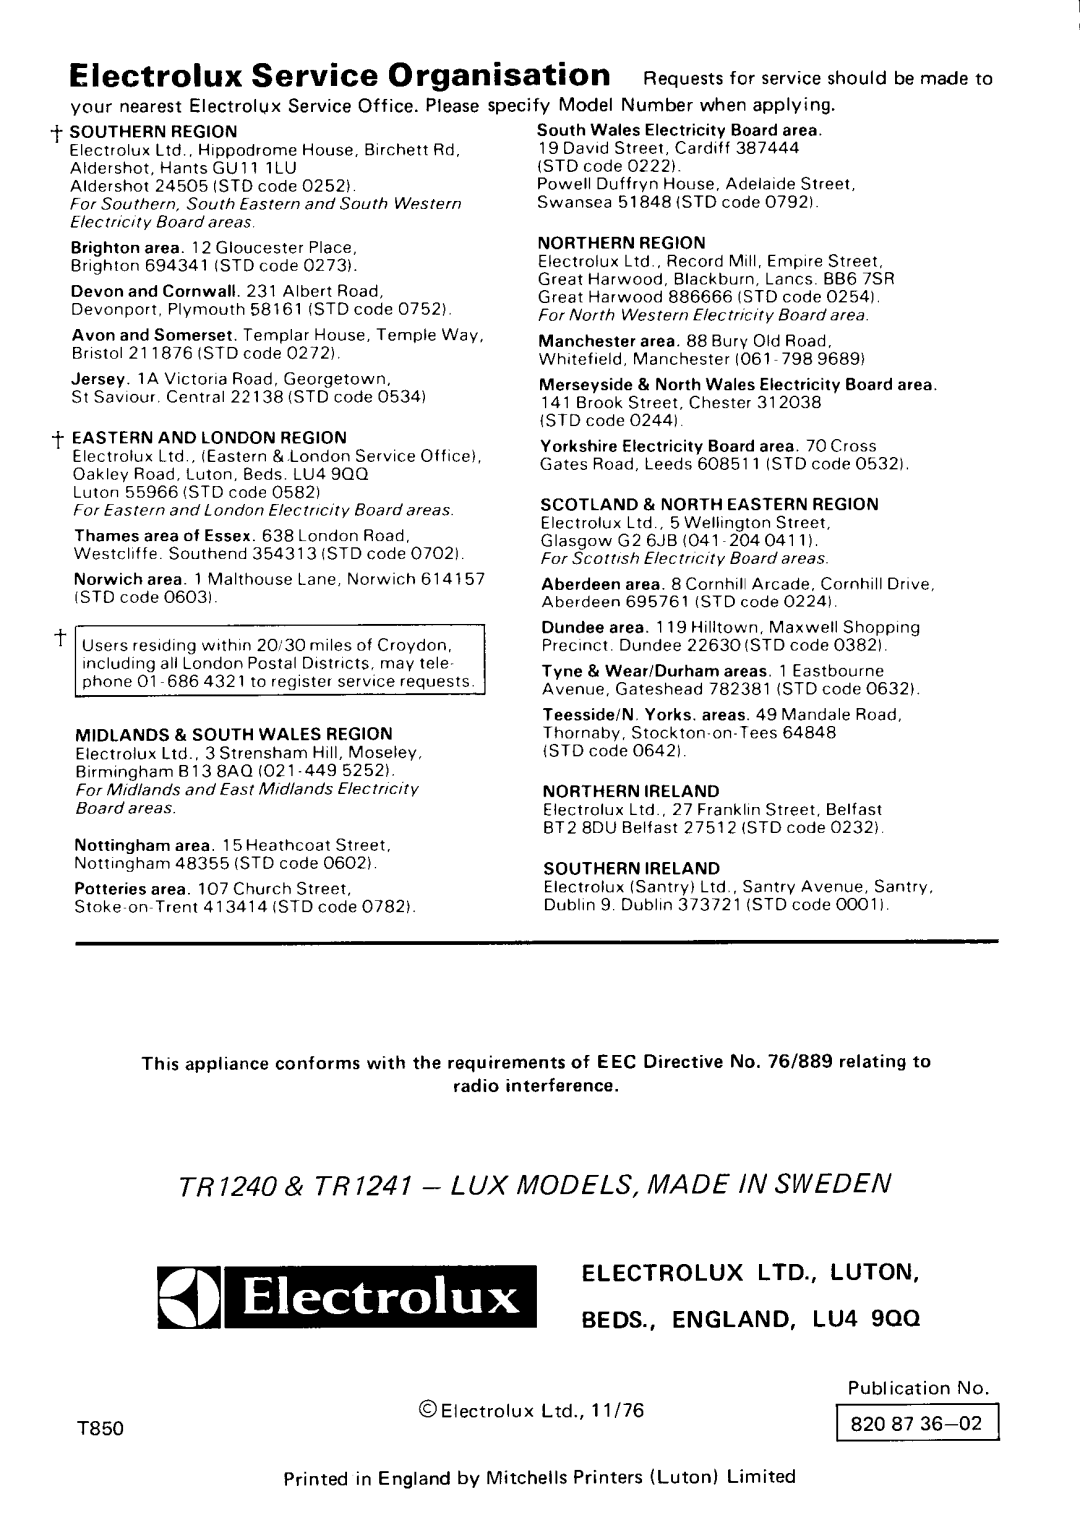 Electrolux TR1241, TR1240 manual 